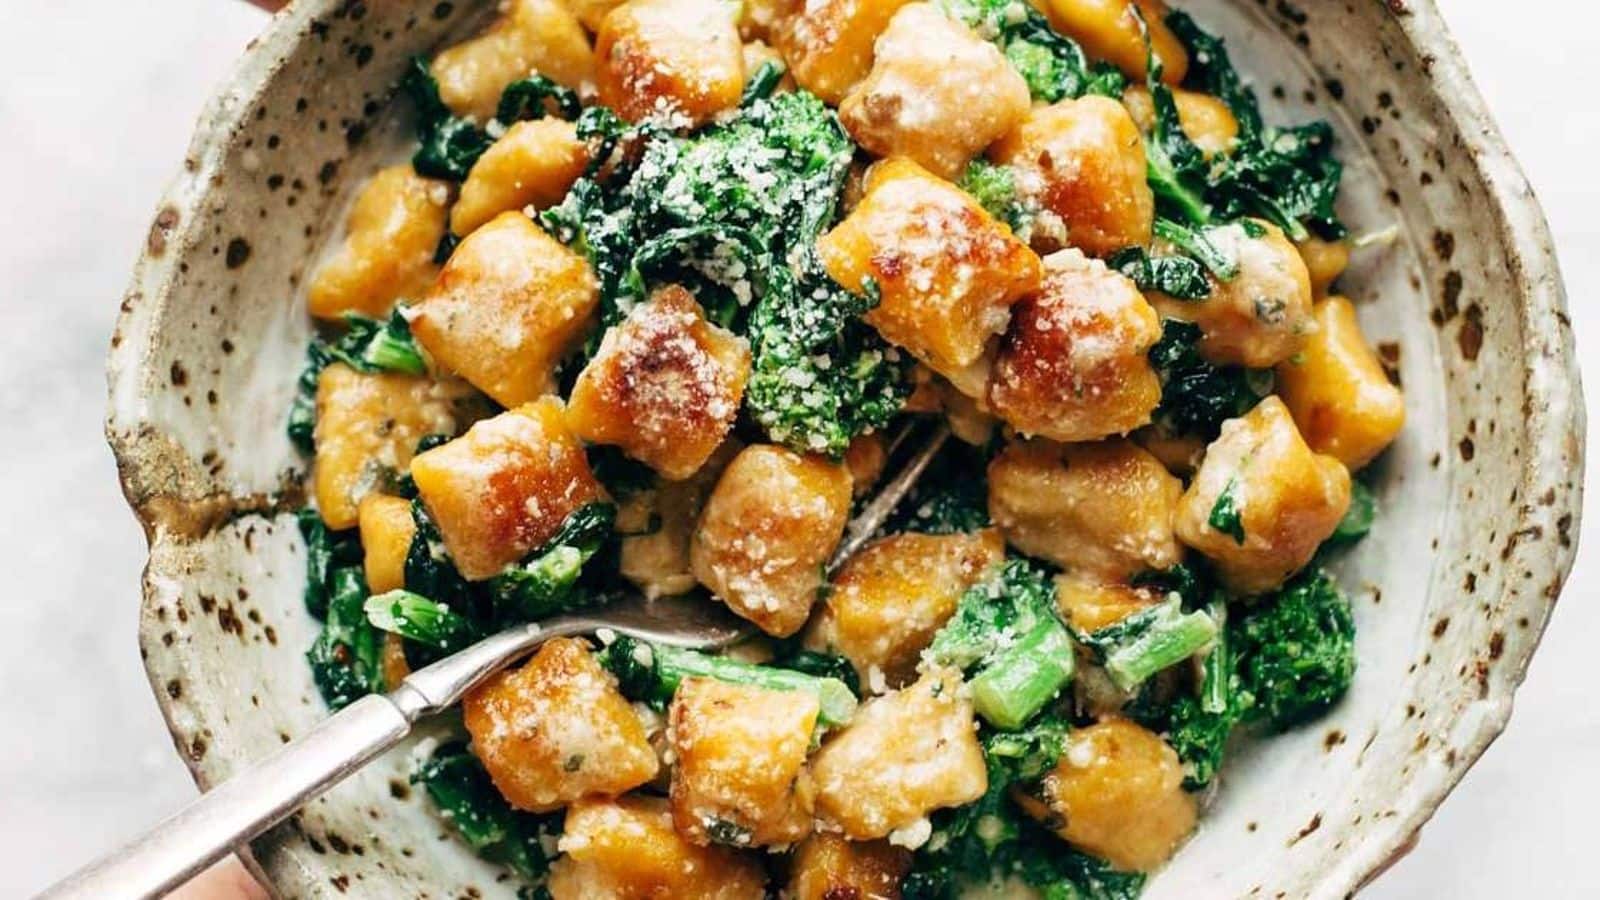 Try this wholesome vegan sweet potato gnocchi recipe